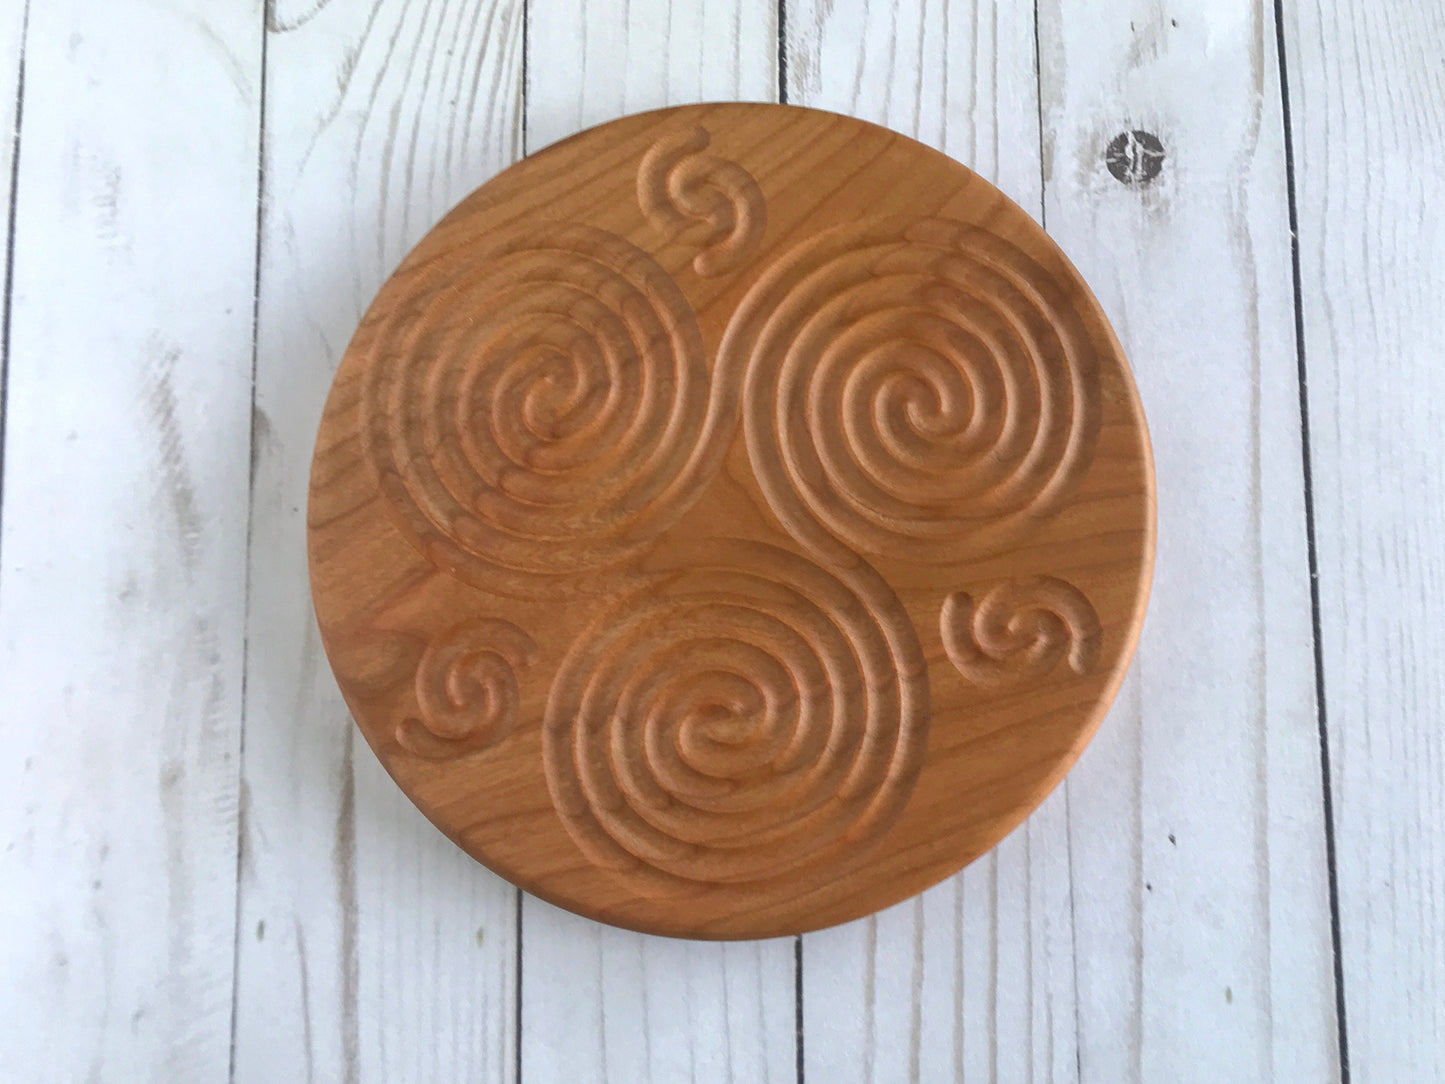 Triskelion Finger Labyrinth in Cherry Wood, 7.5" diameter